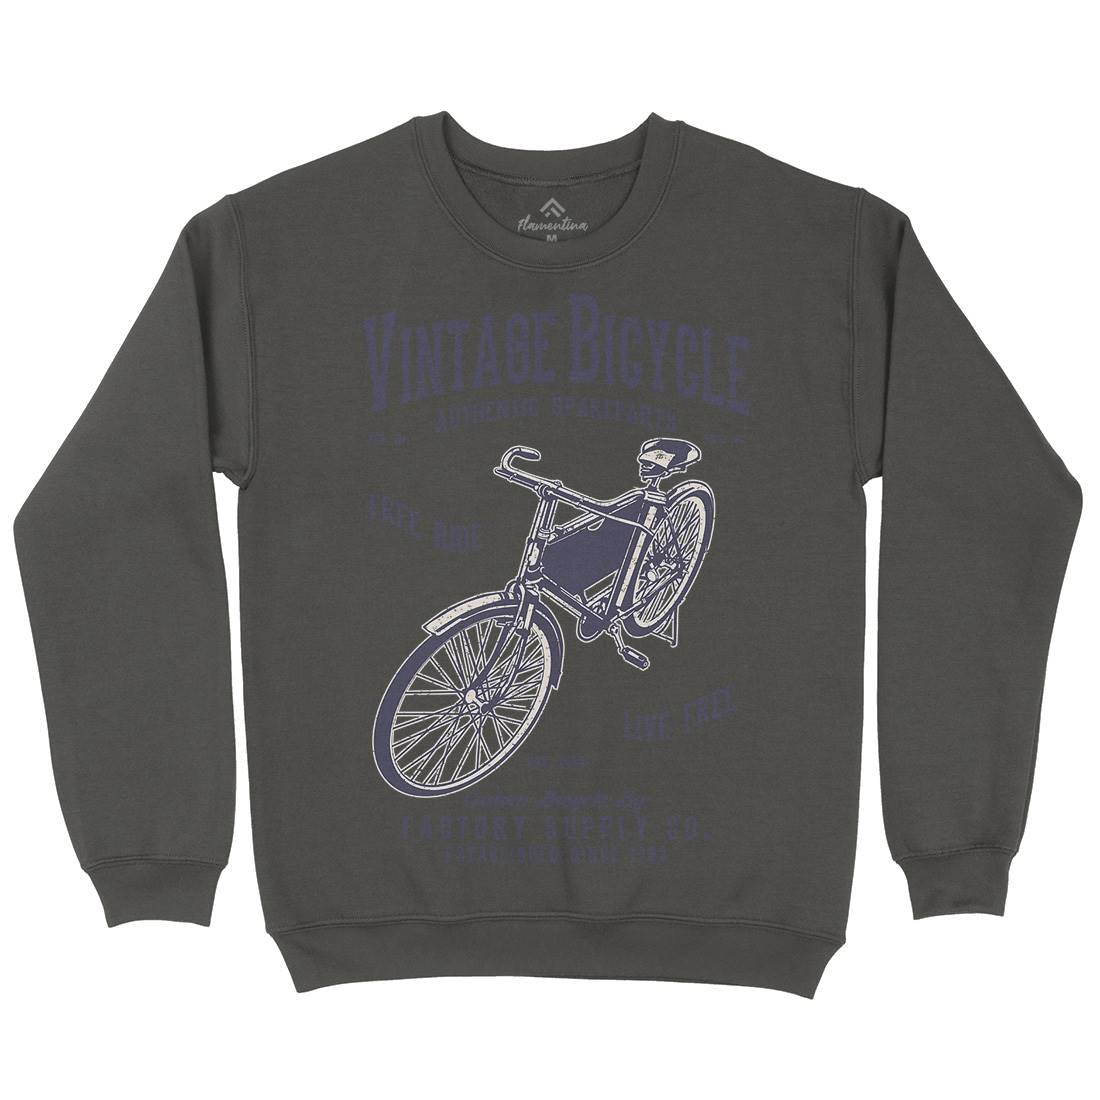 Vintage Bicycle Kids Crew Neck Sweatshirt Bikes A784